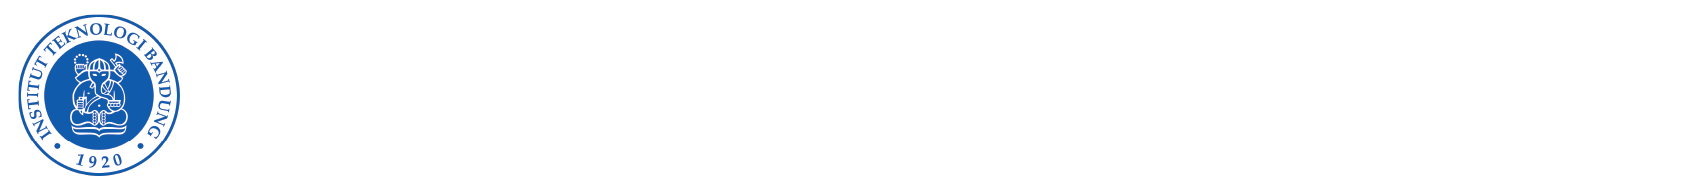 Matematika – Institut Teknologi Bandung - 